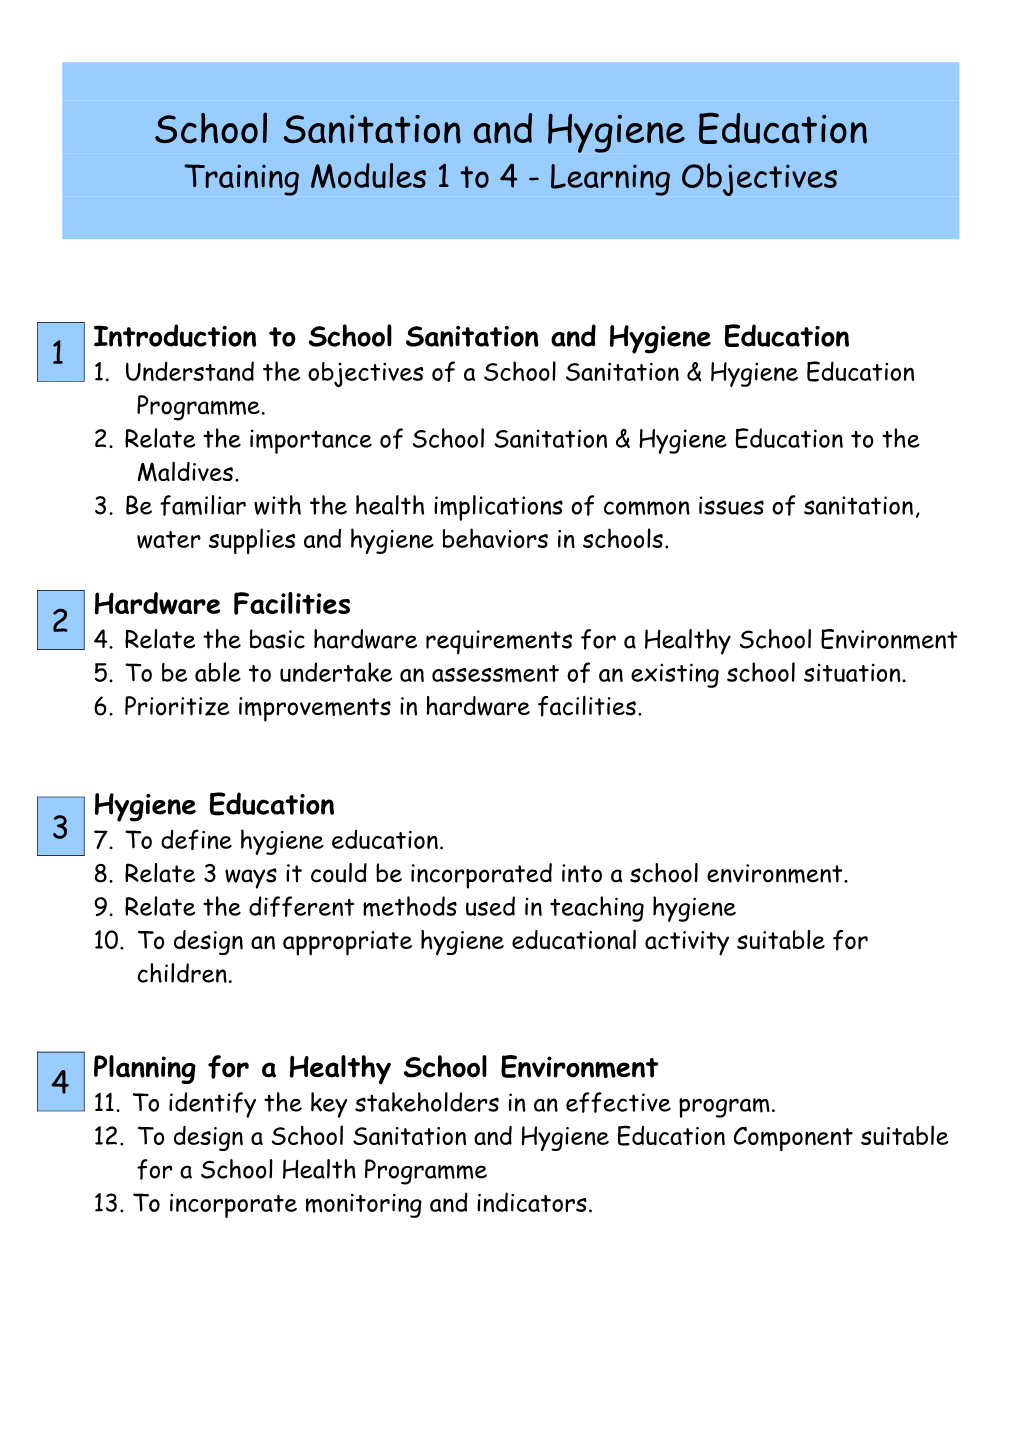 School Sanitation and Hygine Education Training Modules 1- 4